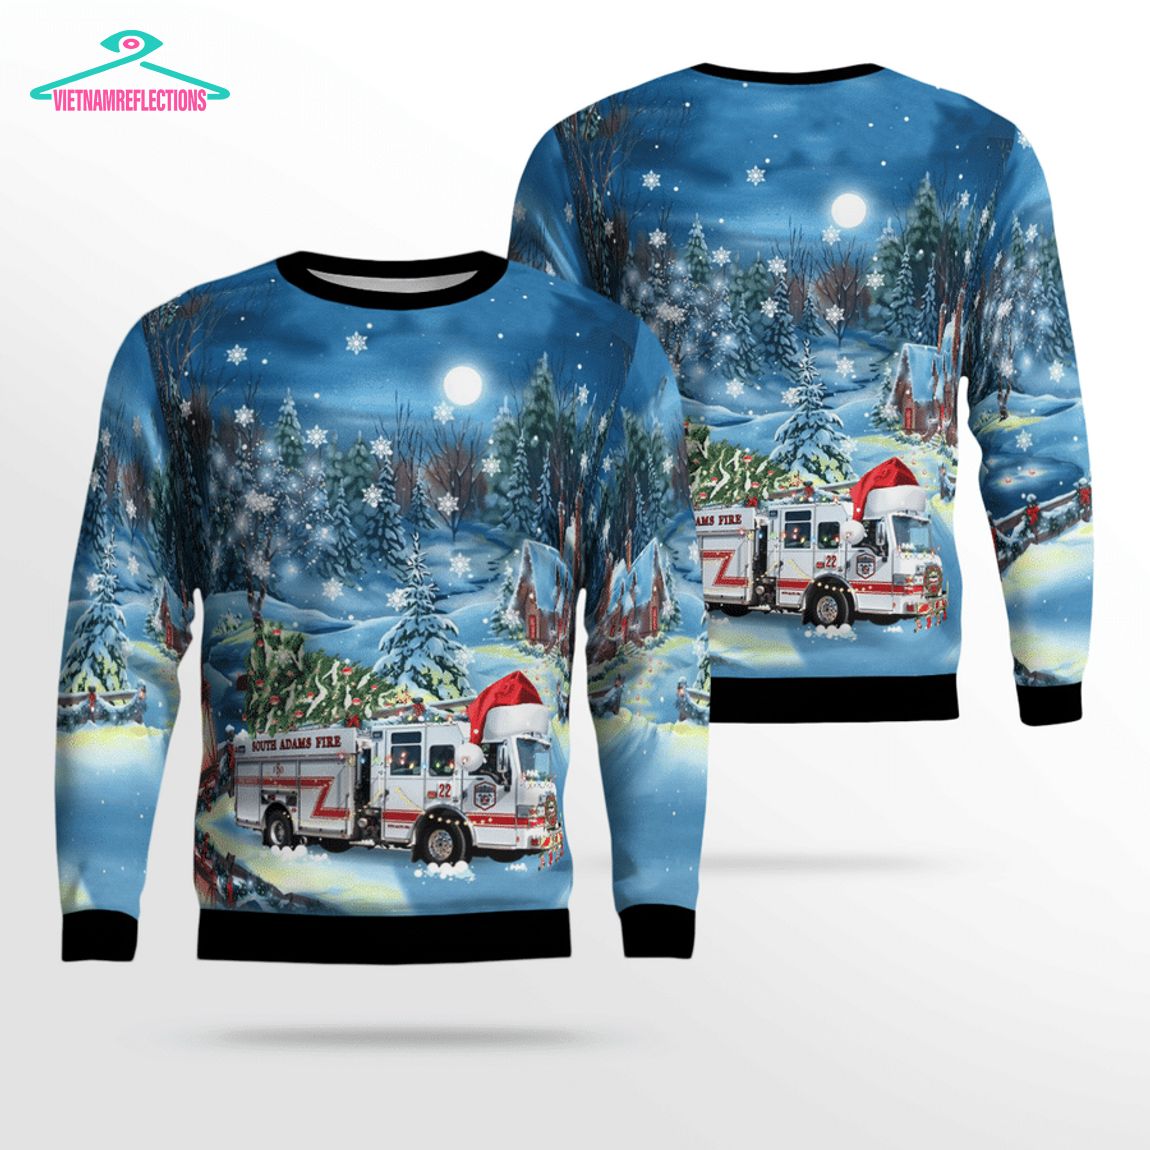 colorado-south-adams-county-fire-department-3d-christmas-sweater-1-3ECTm.jpg